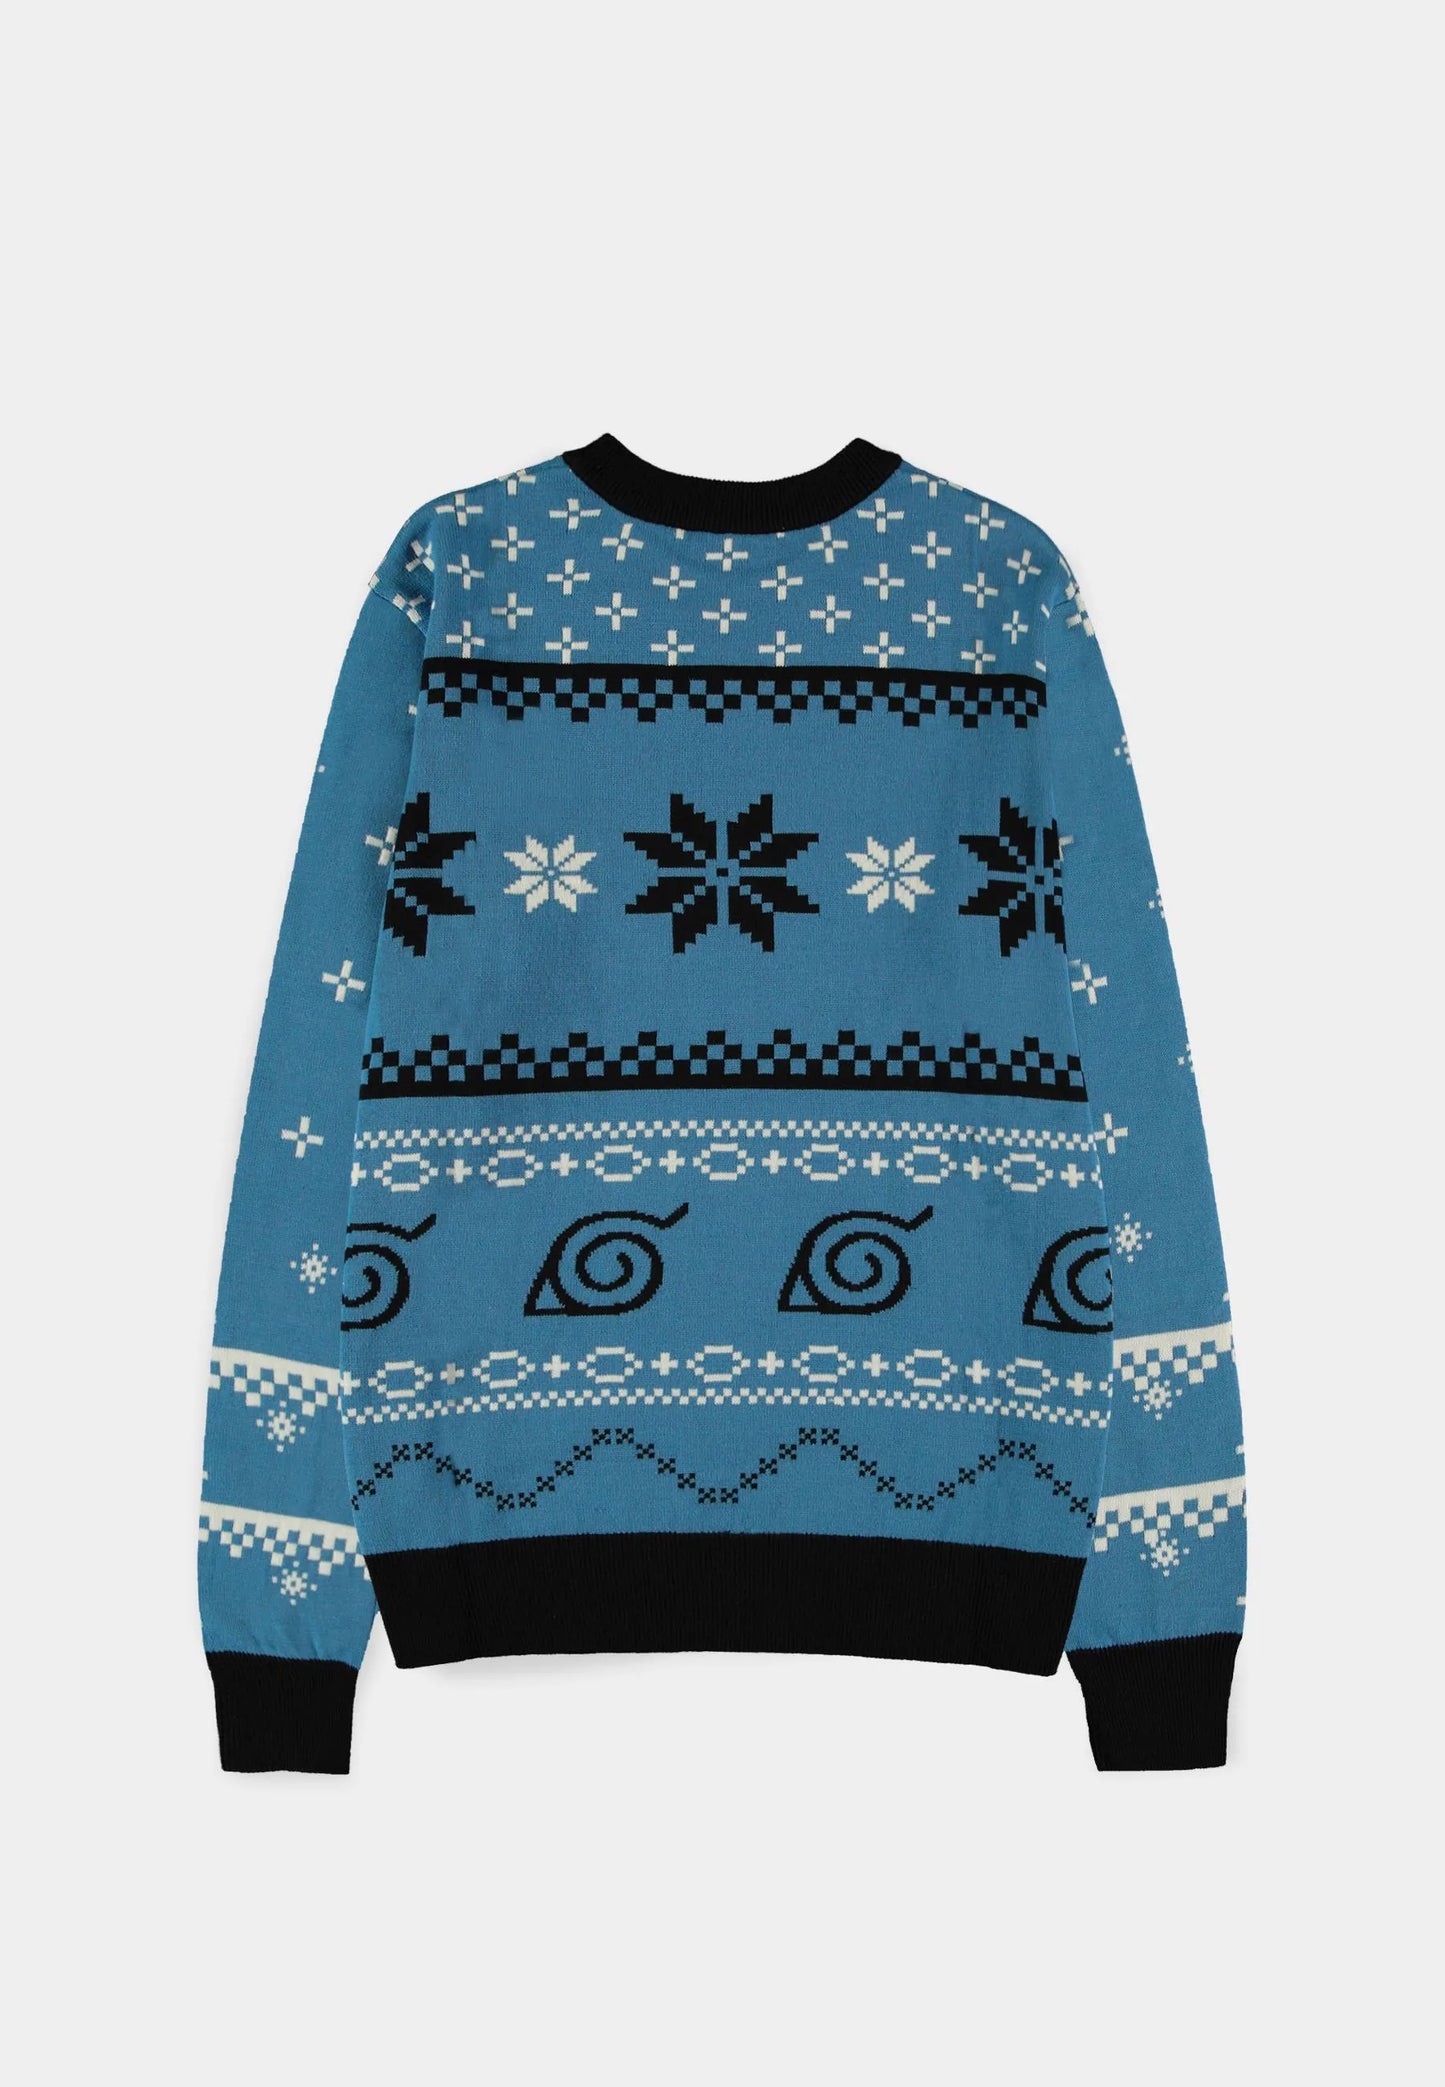 Naruto Shippuden Christmas Sweater 